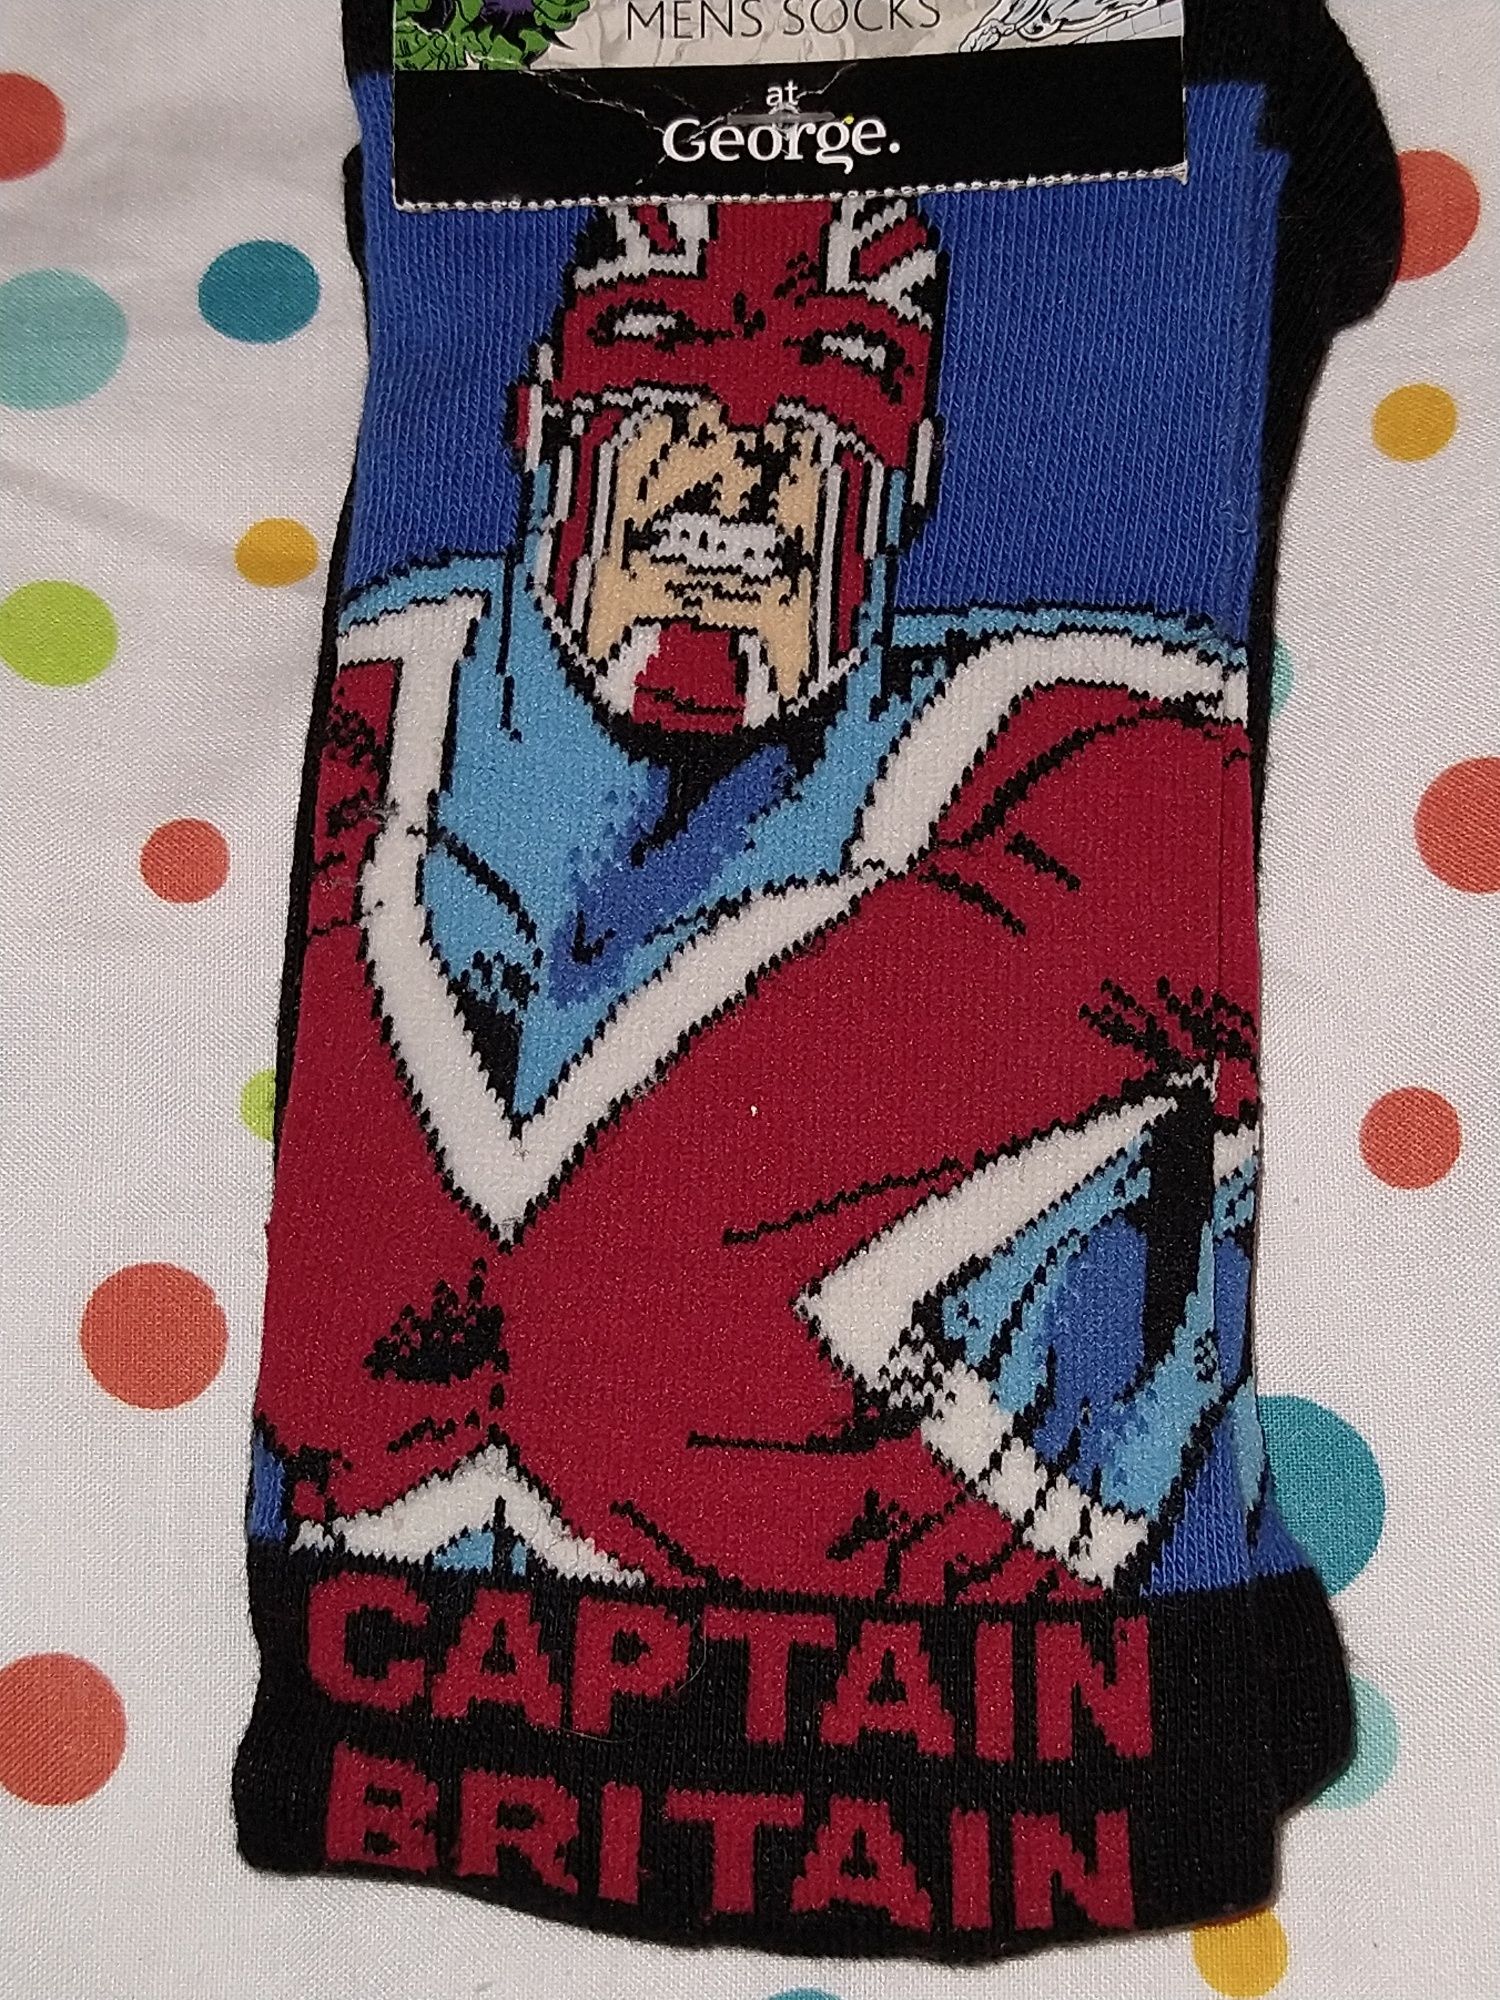 Captain Britain/Marvel - Skarpety rozmiar 39-42/5 "George"